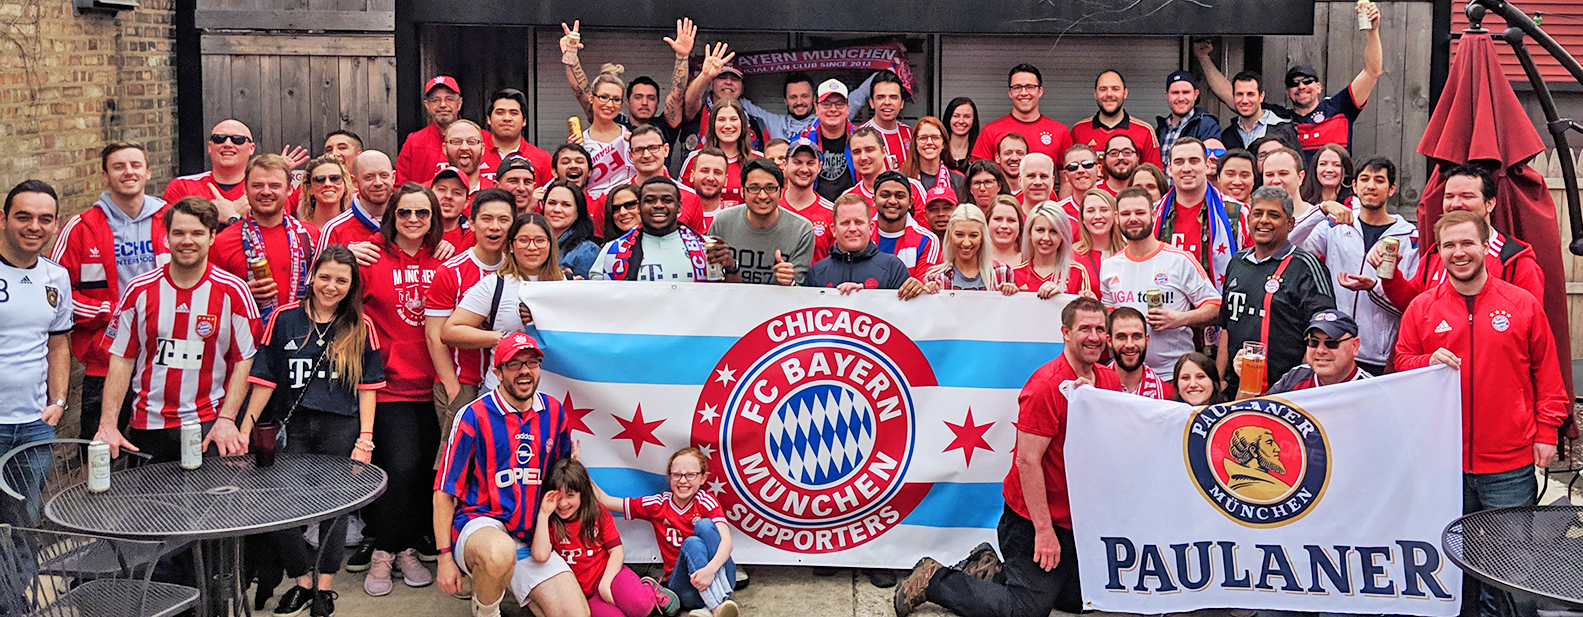 Chicago of FC Bayern Munich – The Bayern fans in Chicago